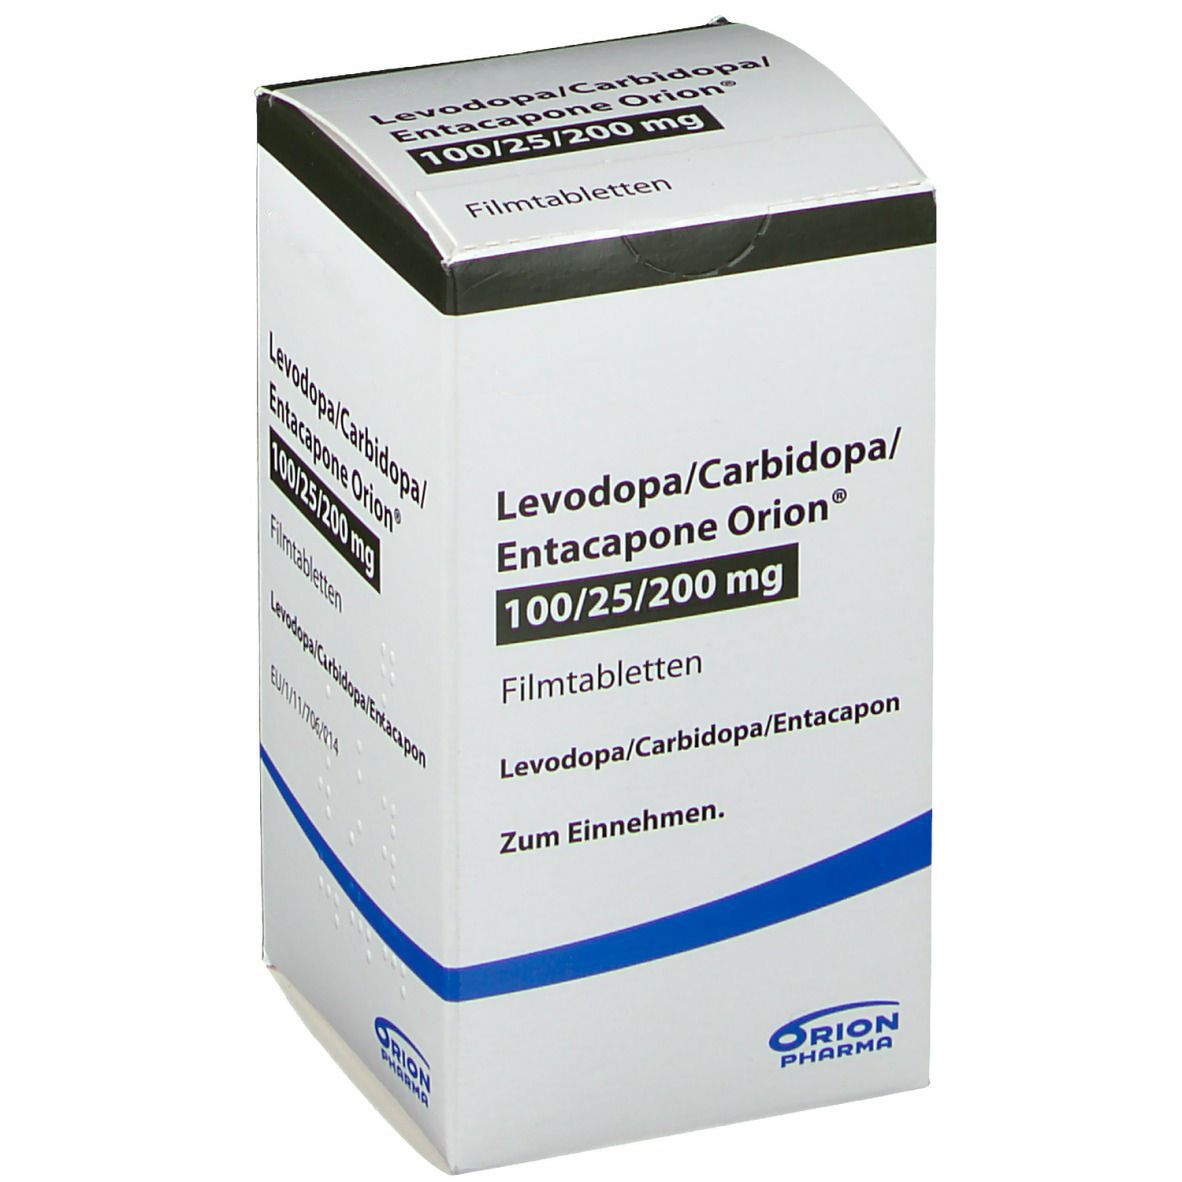 Levodoba/Carbidopa/Entacapone Orion® 100 mg/25 mg/200 mg